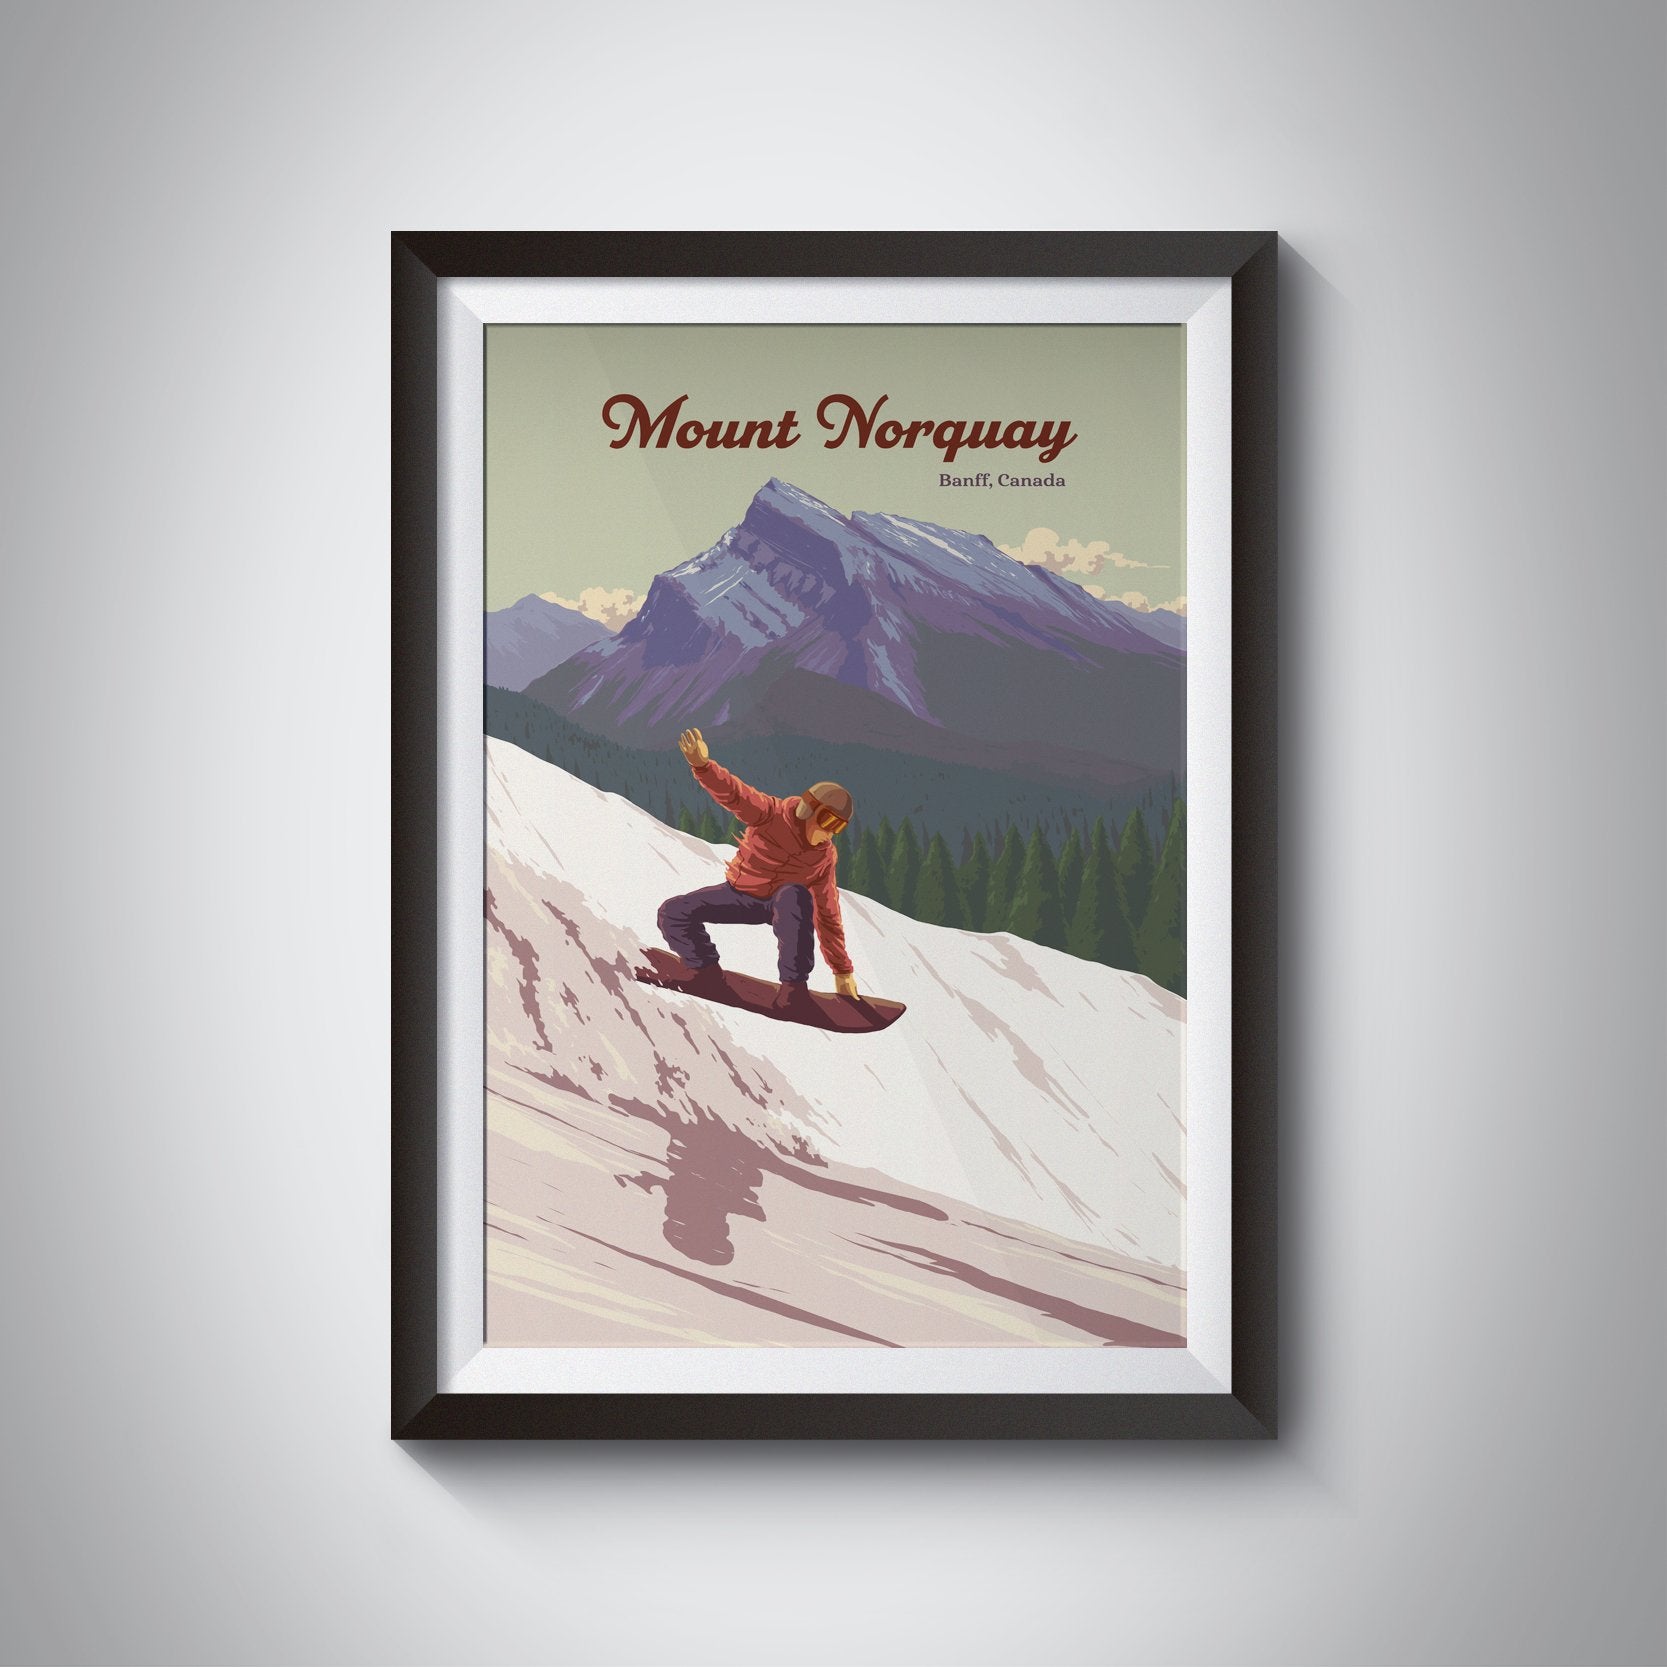 Mount Norquay Banff Canada Snowboarding Travel Poster